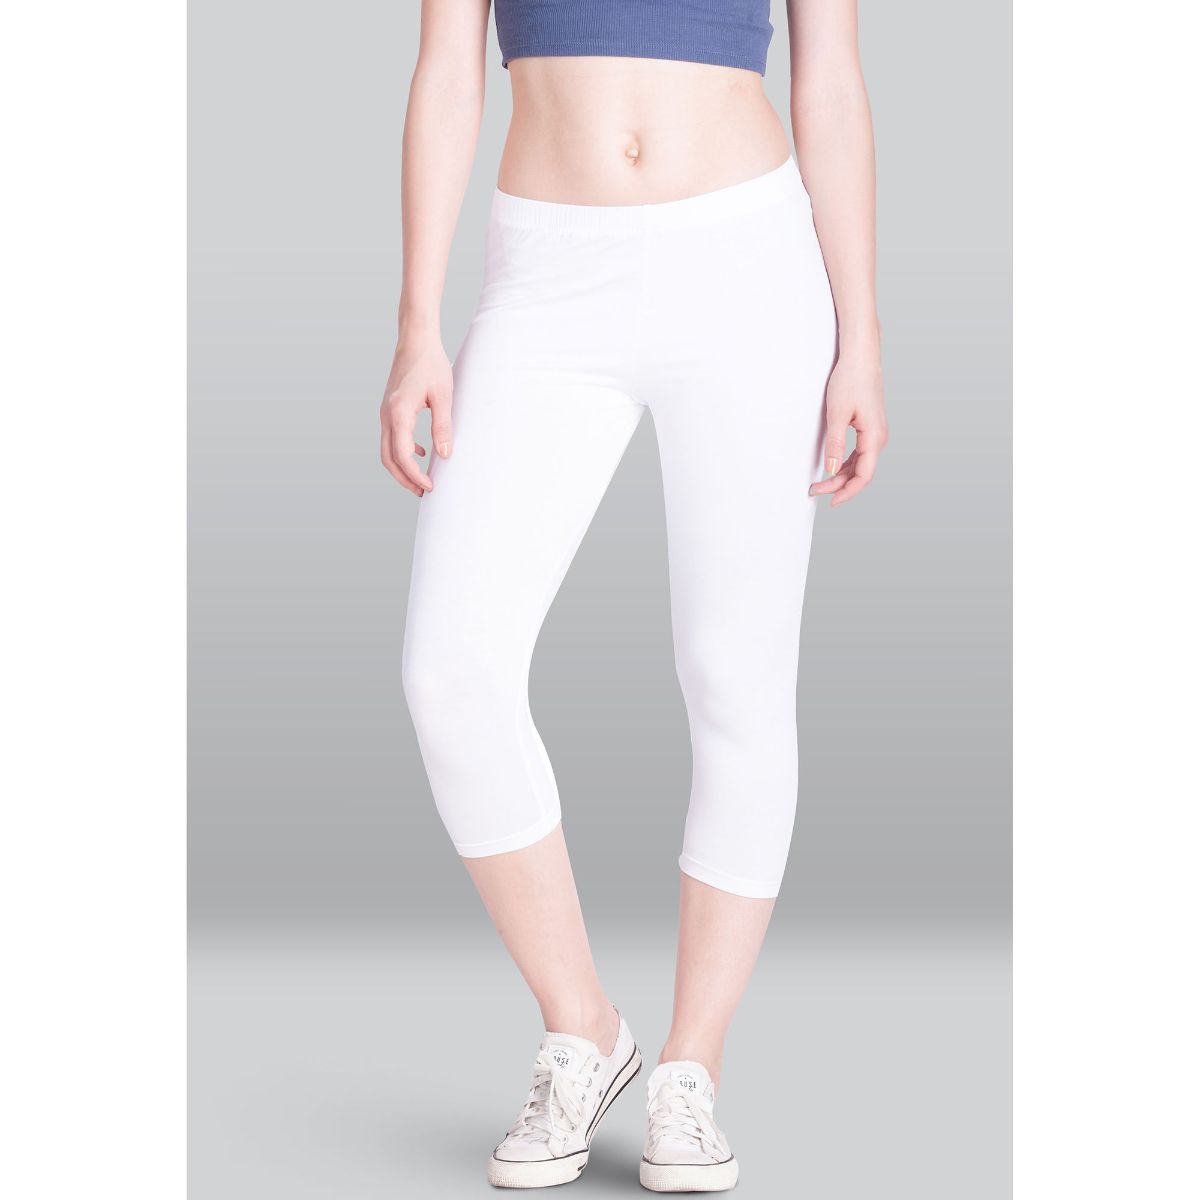 Buy White Pants for Women by Rangita Online  Ajiocom